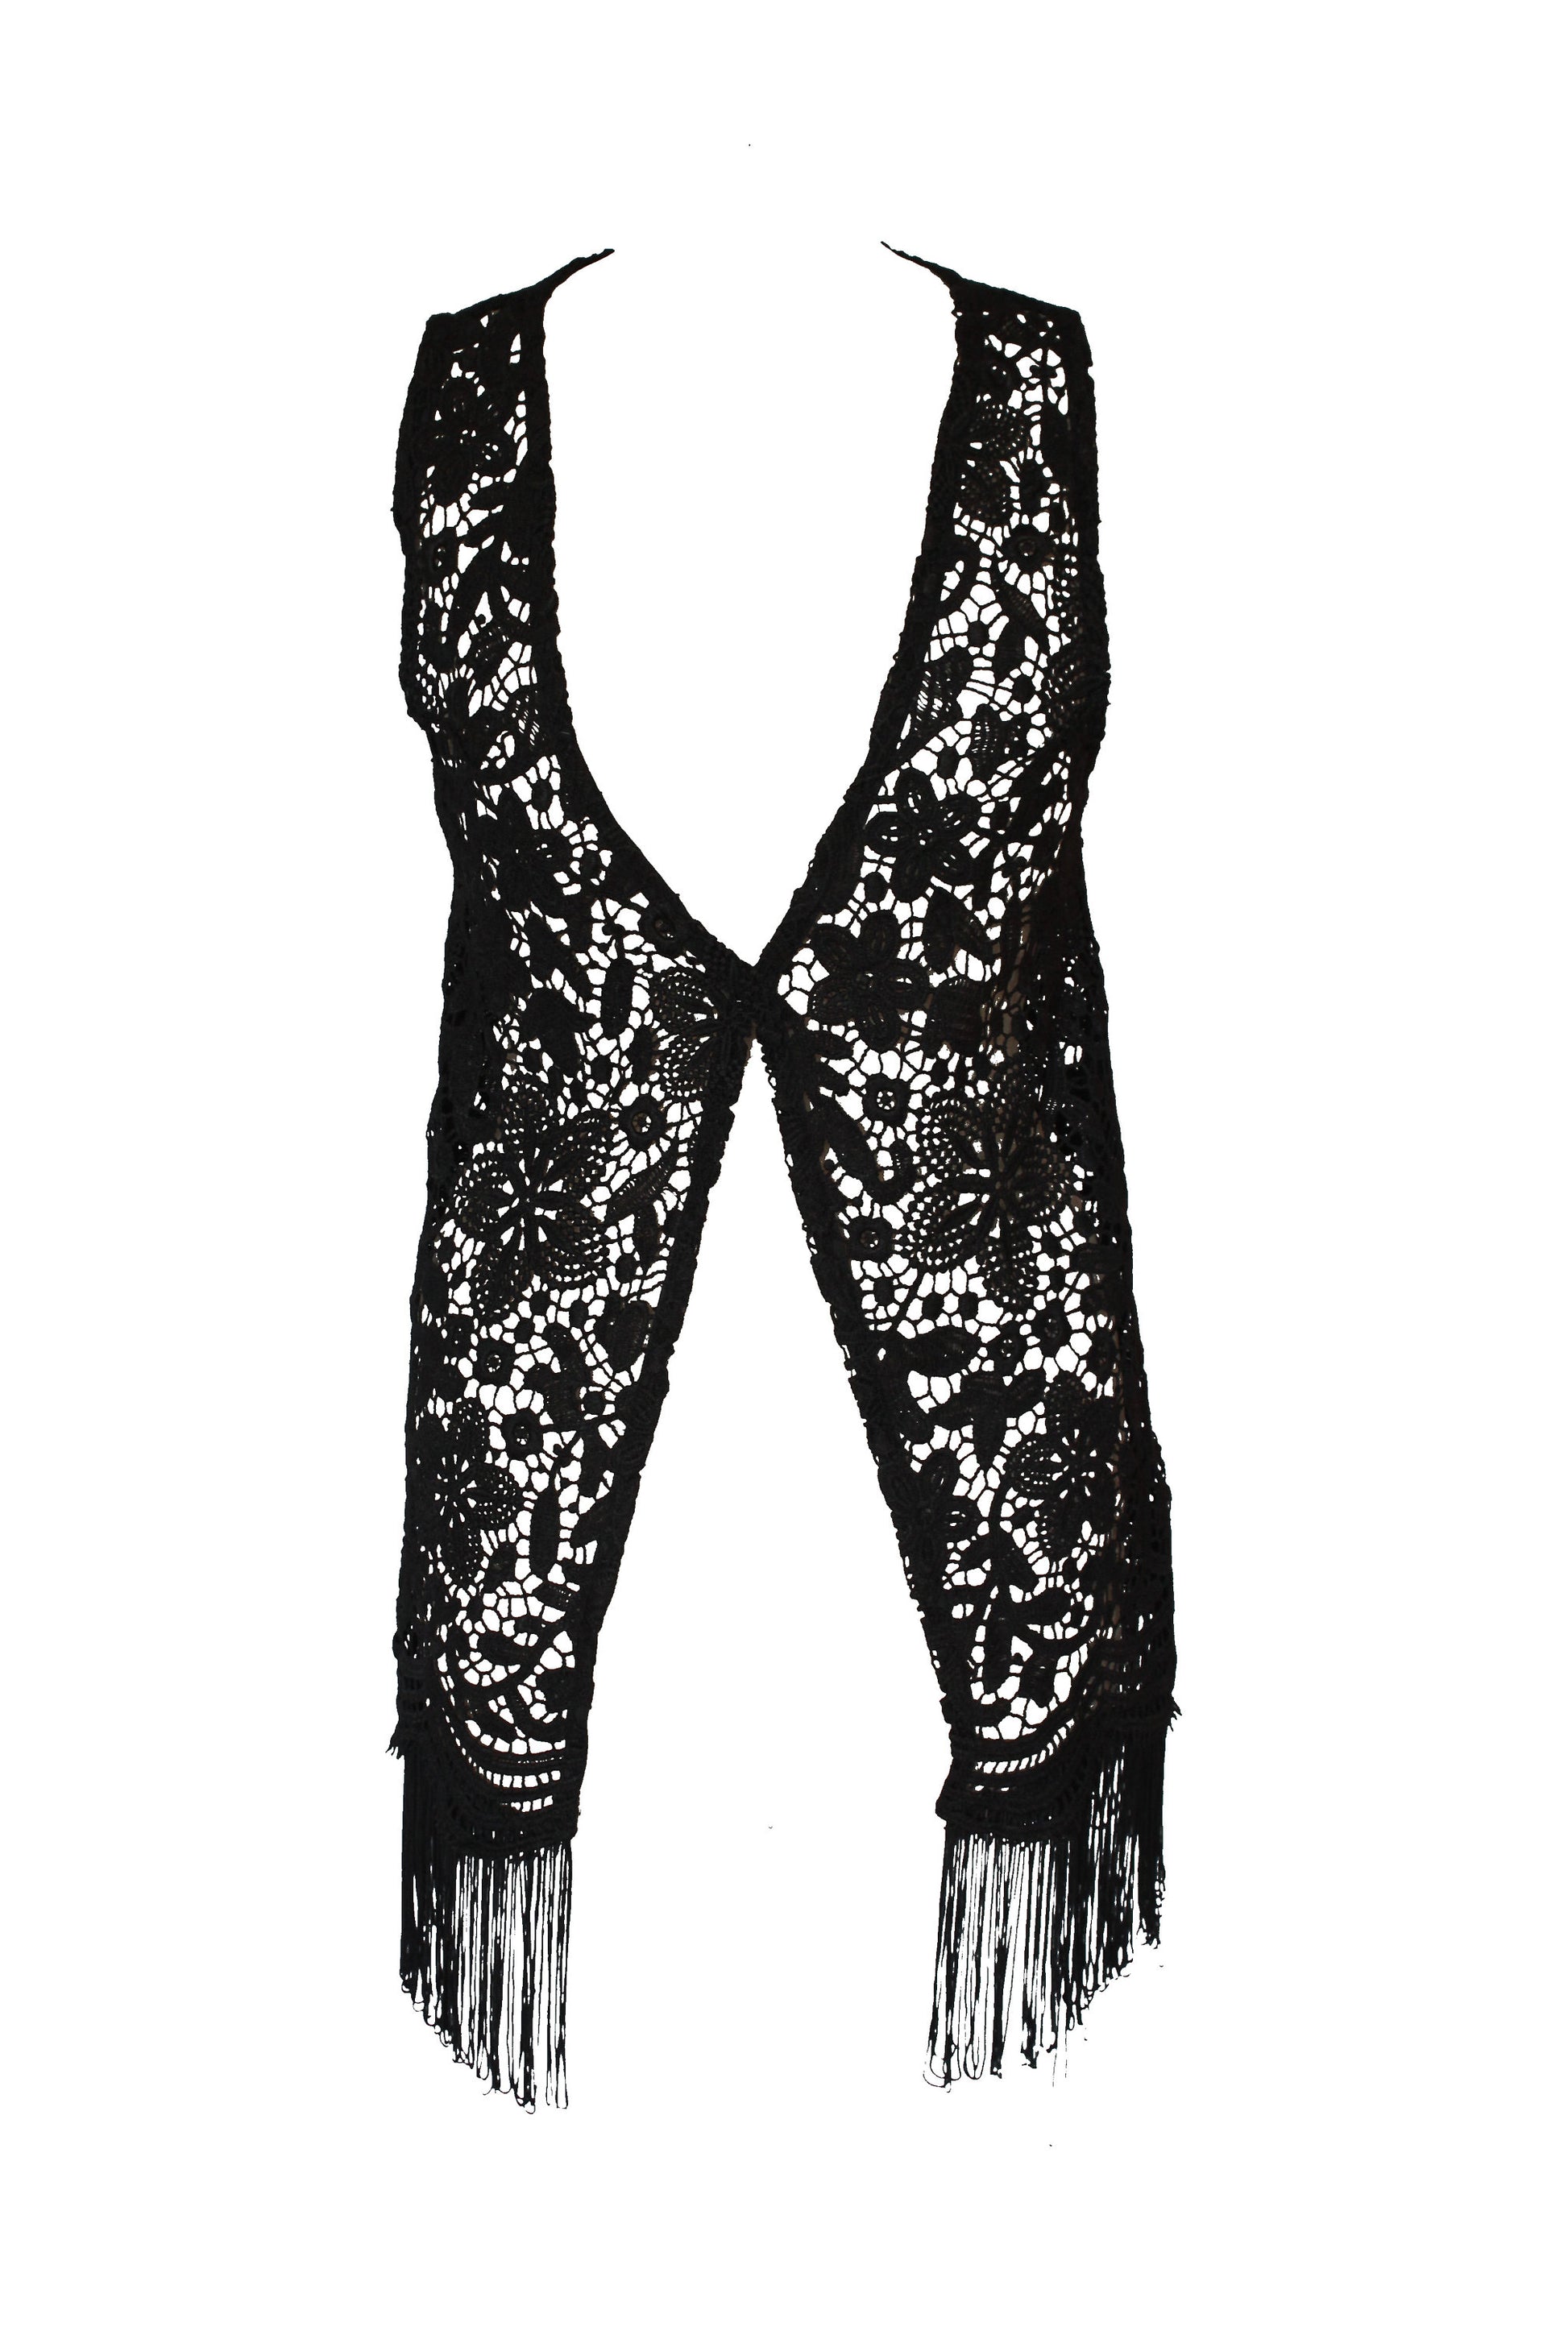 black lace crochet fringe vest boho vest fringed vest burning man vest hippie waistcoat | One size fits all!